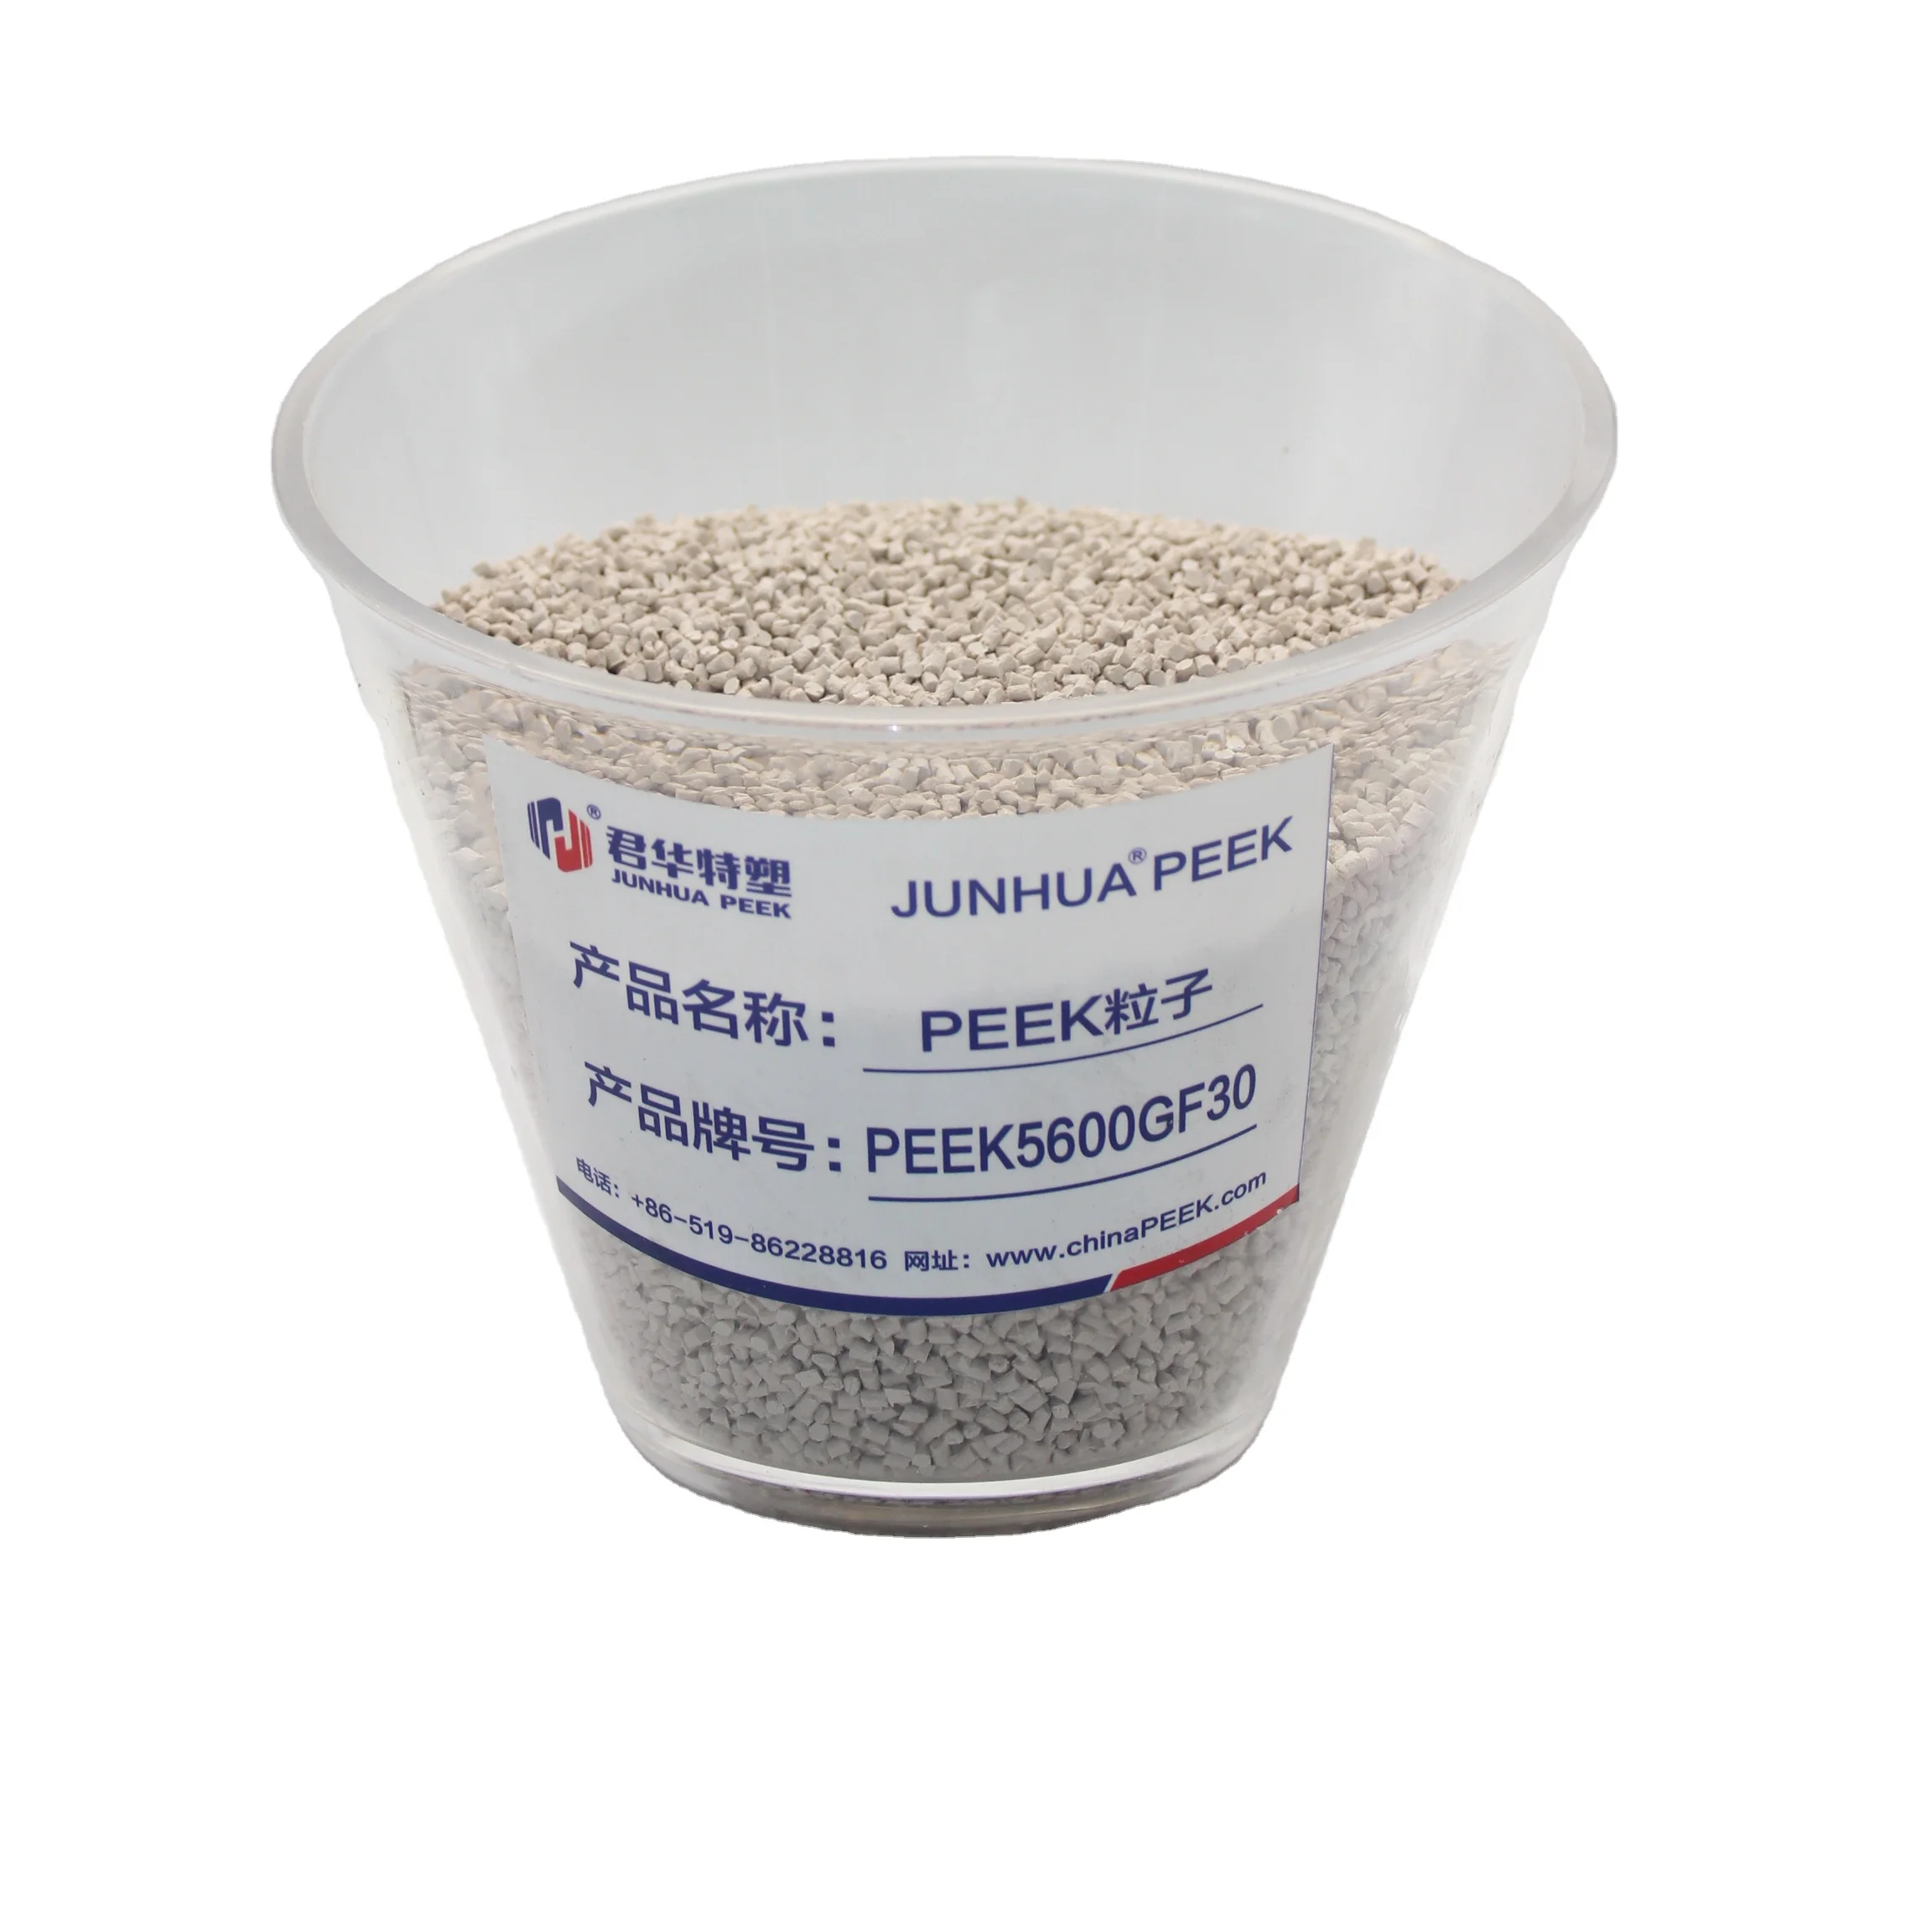 Pure PEEK pellets with competitive price china precio de peek por kg